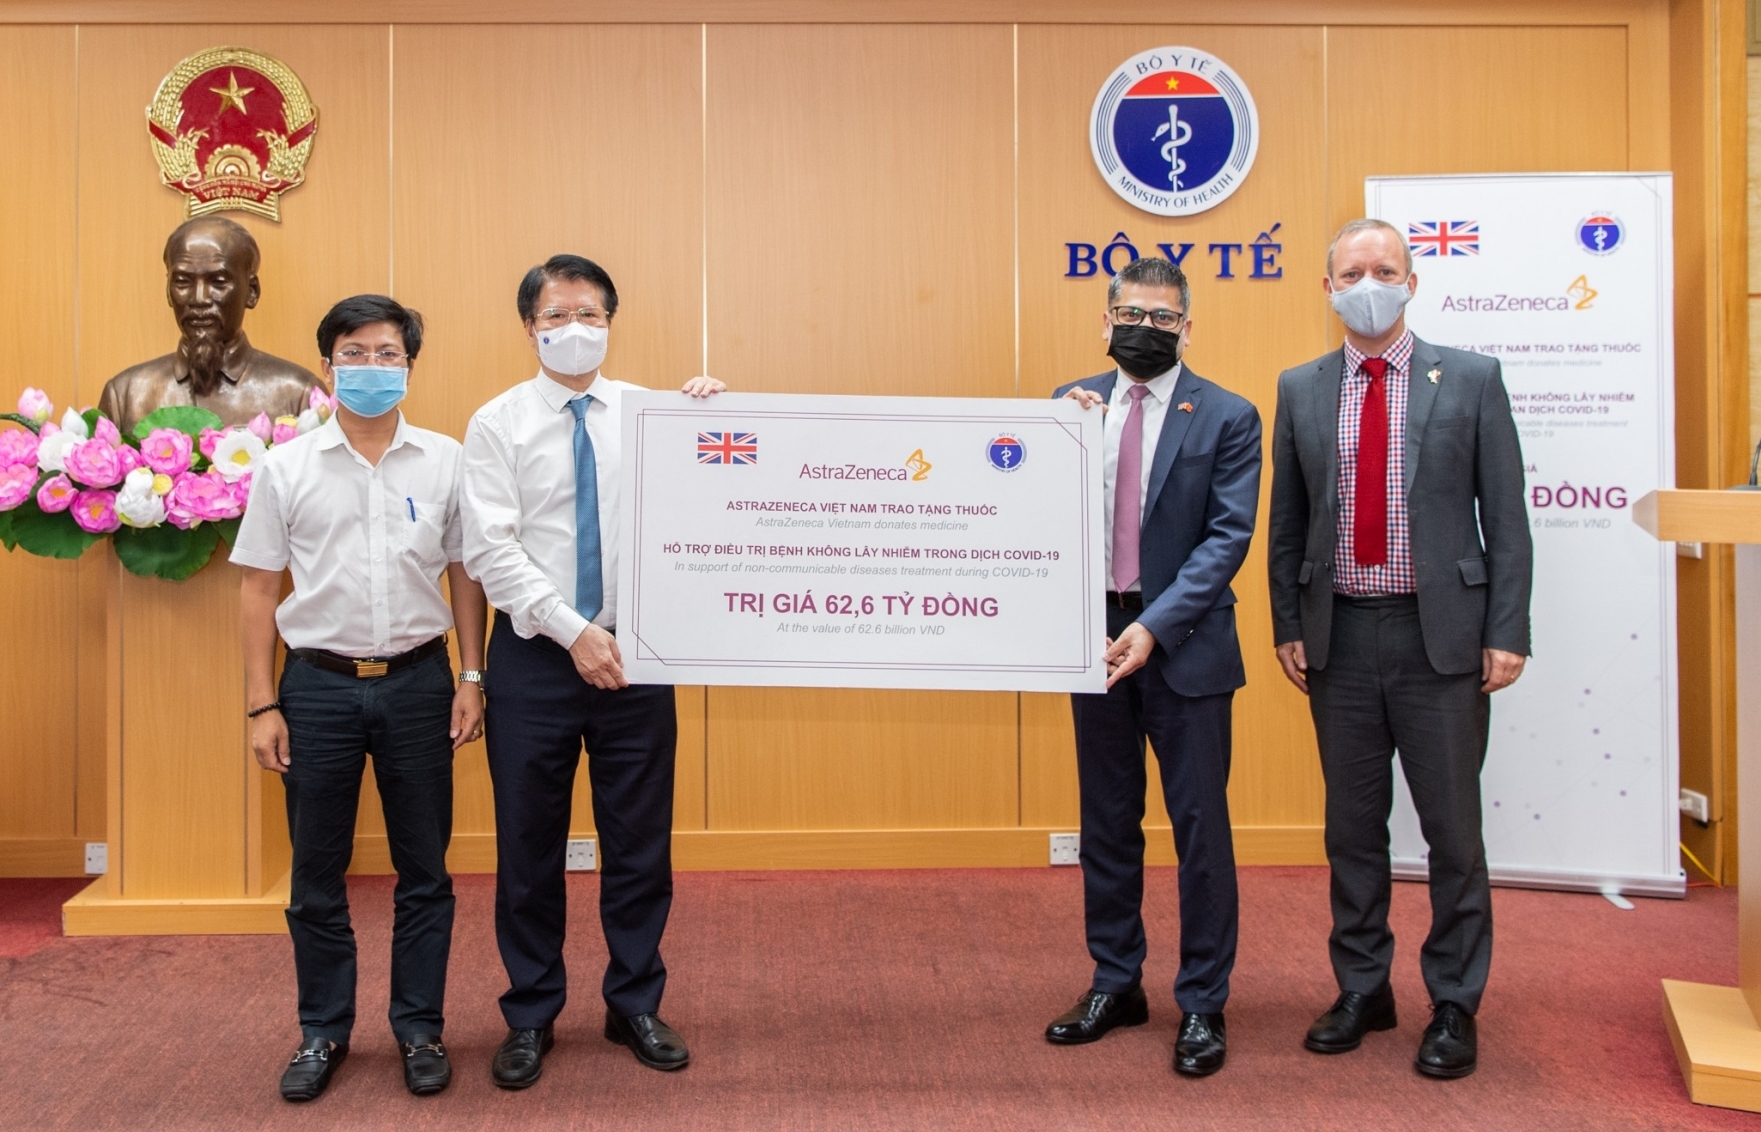 AstraZeneca Vietnam donates medicine for NCD patients during COVID-19